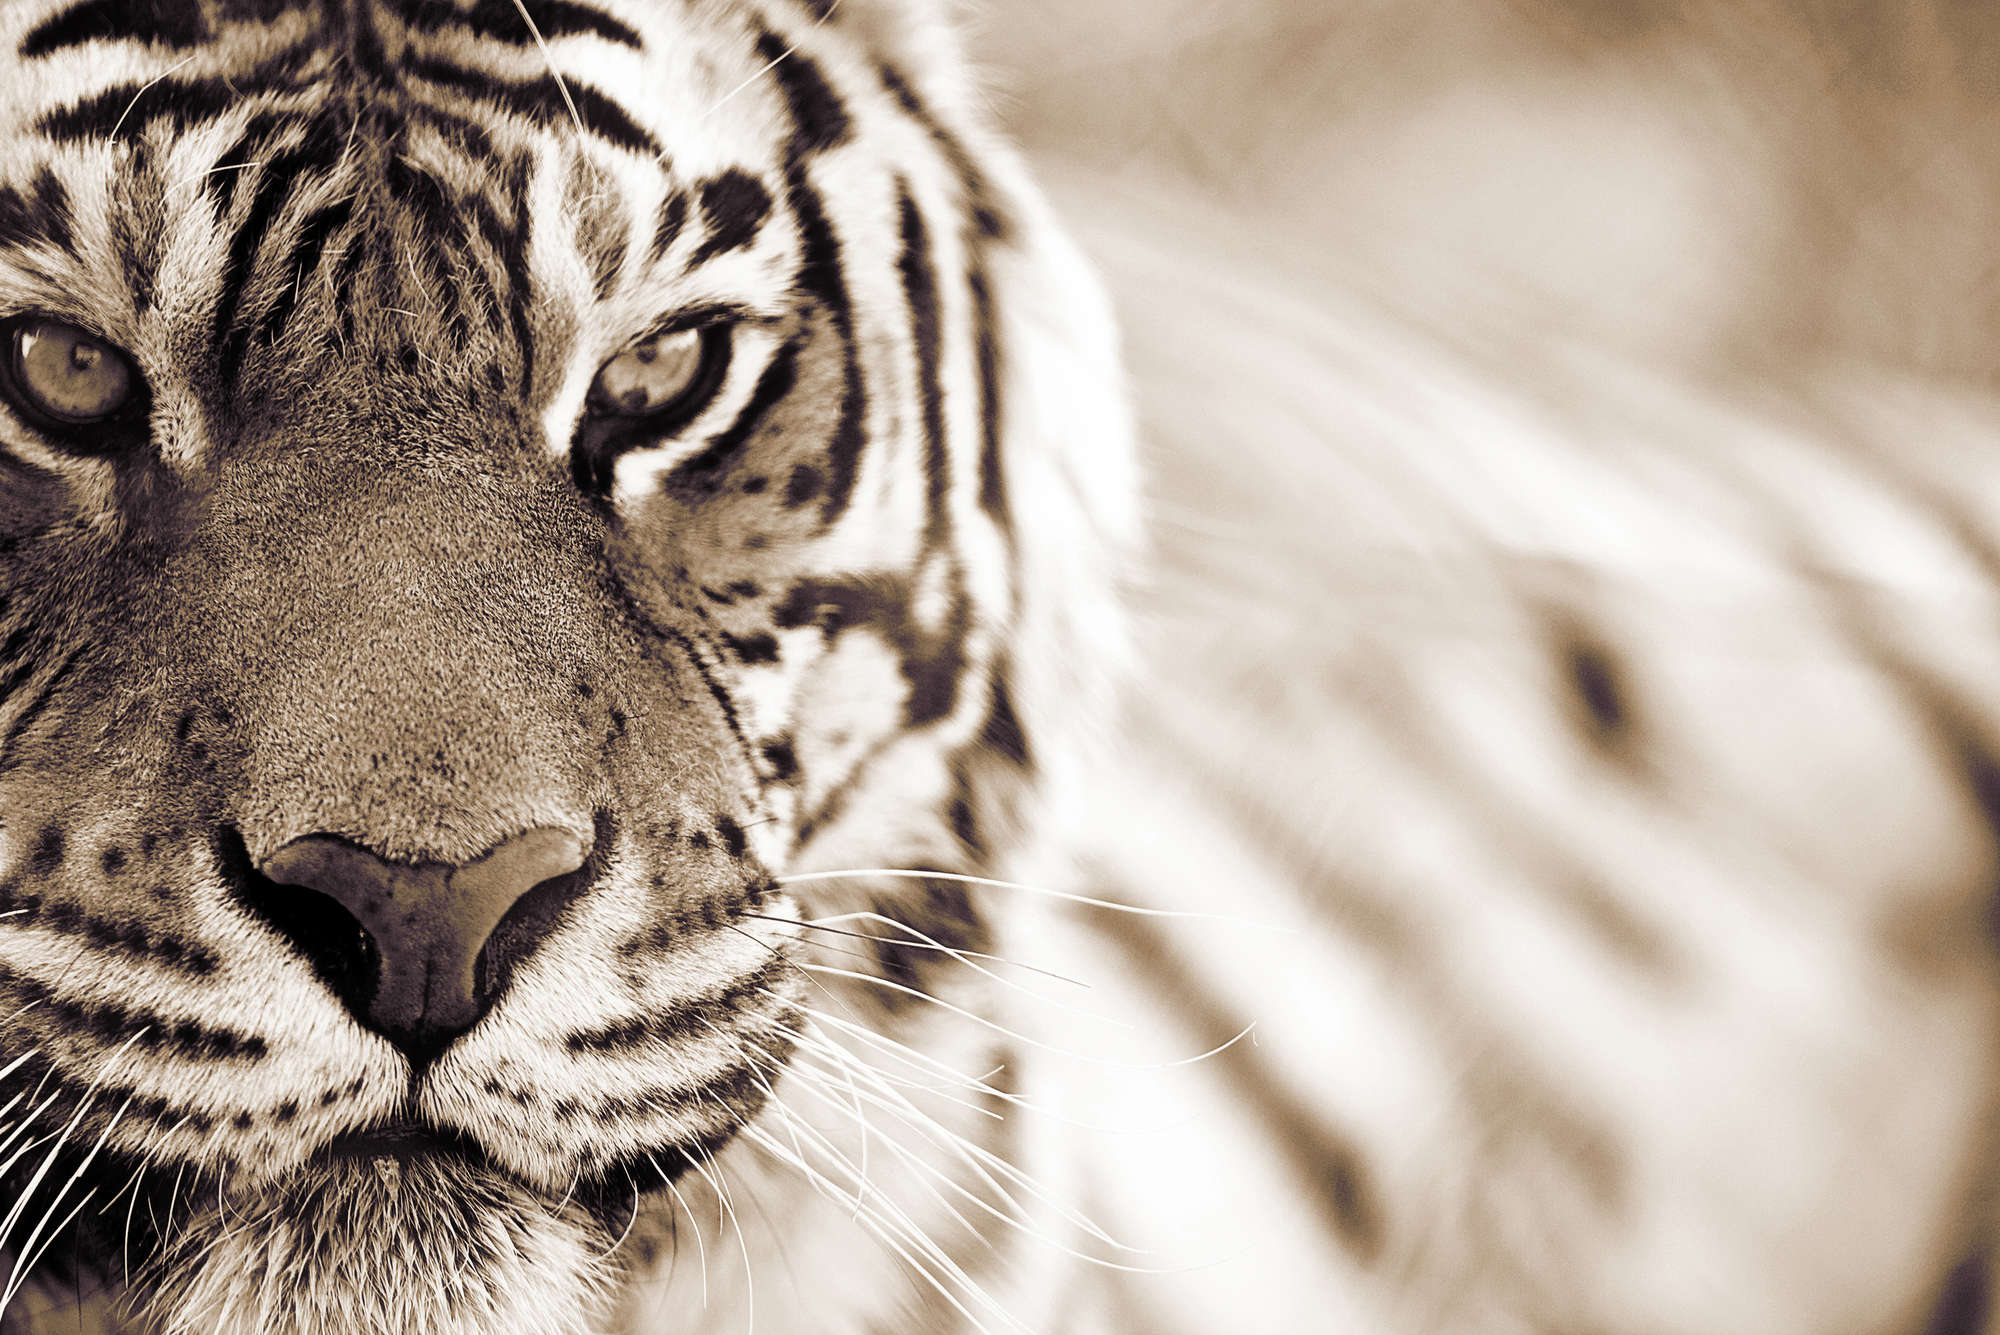             Dierenbehang Close-up van tijger - Premium glad vlies
        